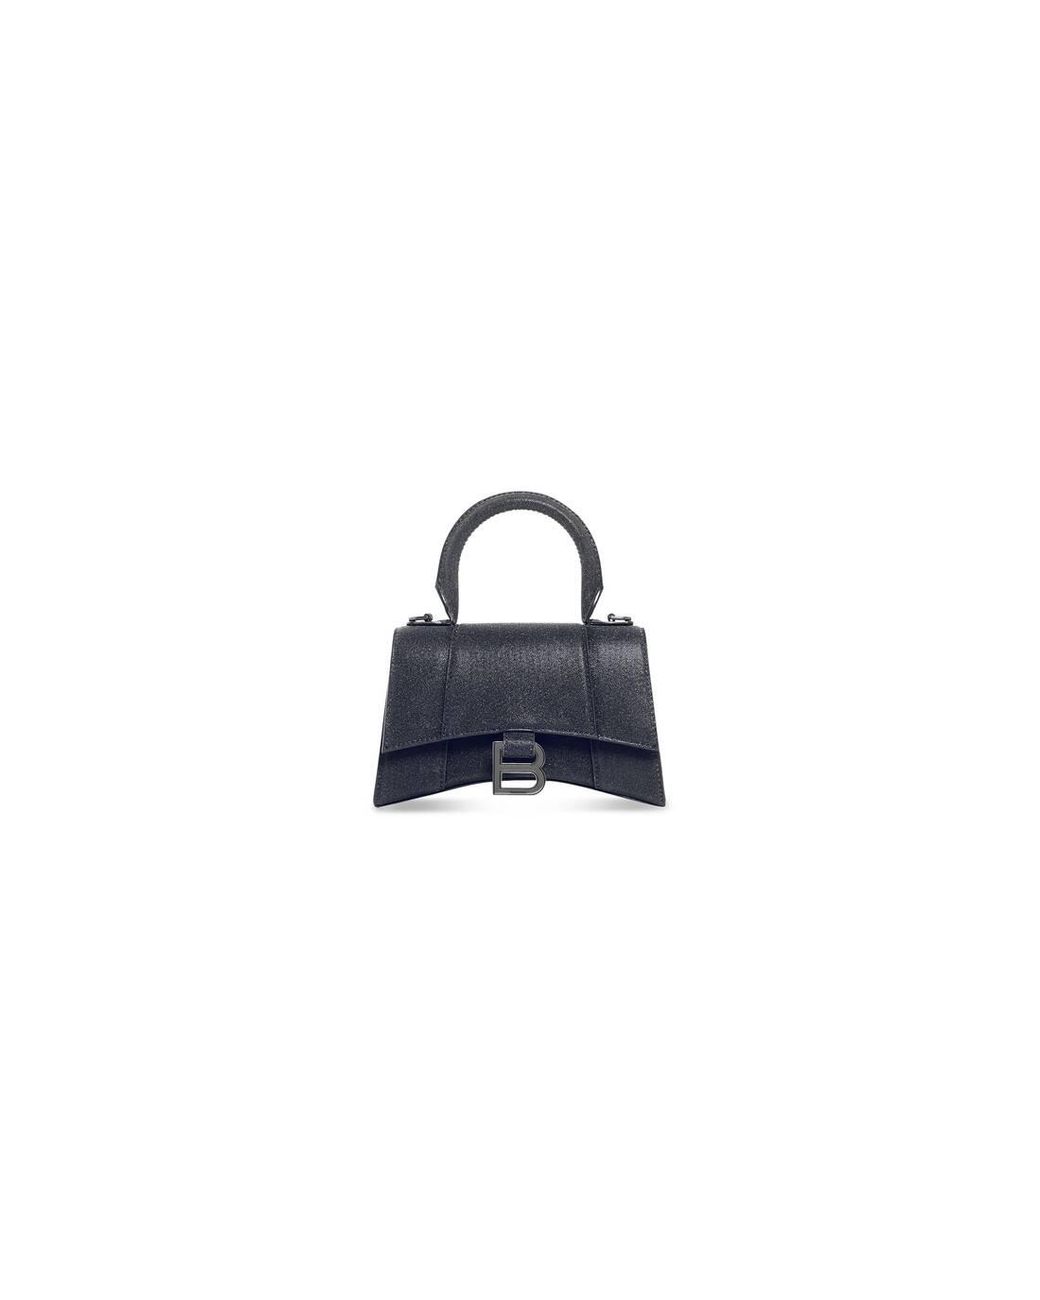 Balenciaga Hourglass Xs Handbag In Glitter Material in Black | Lyst